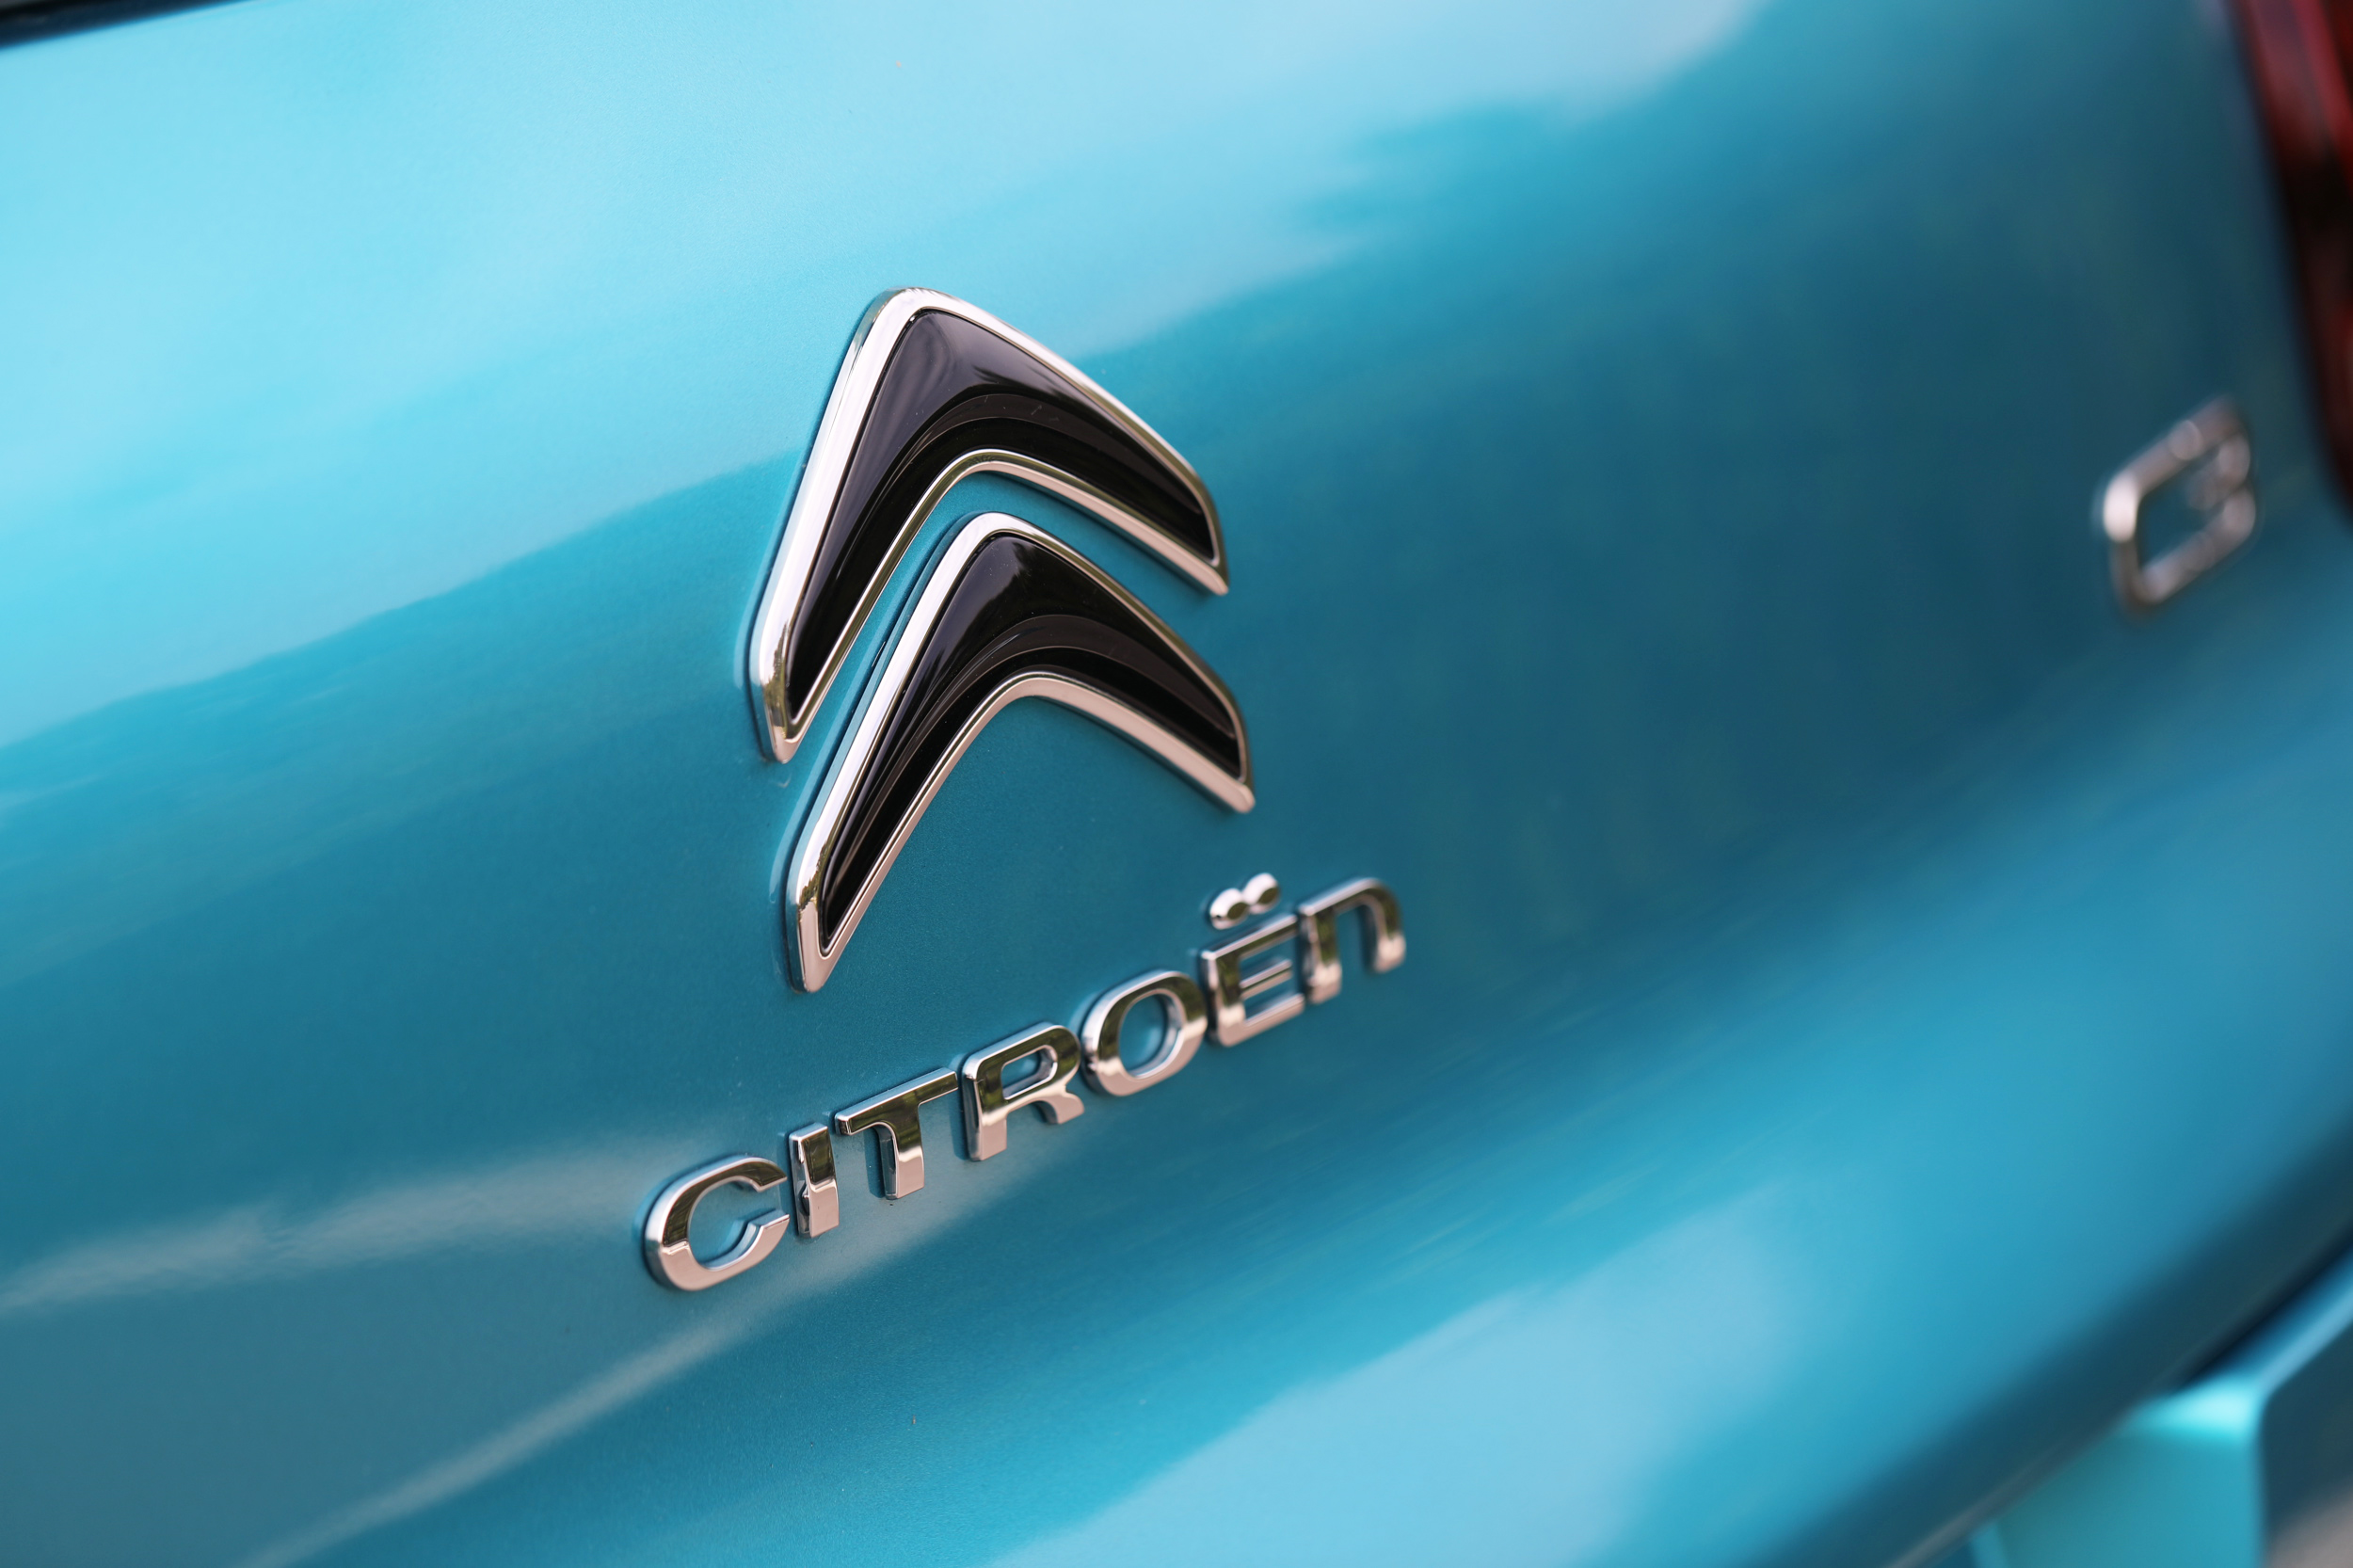 Essai Citroën C3 restylée : lifting léger